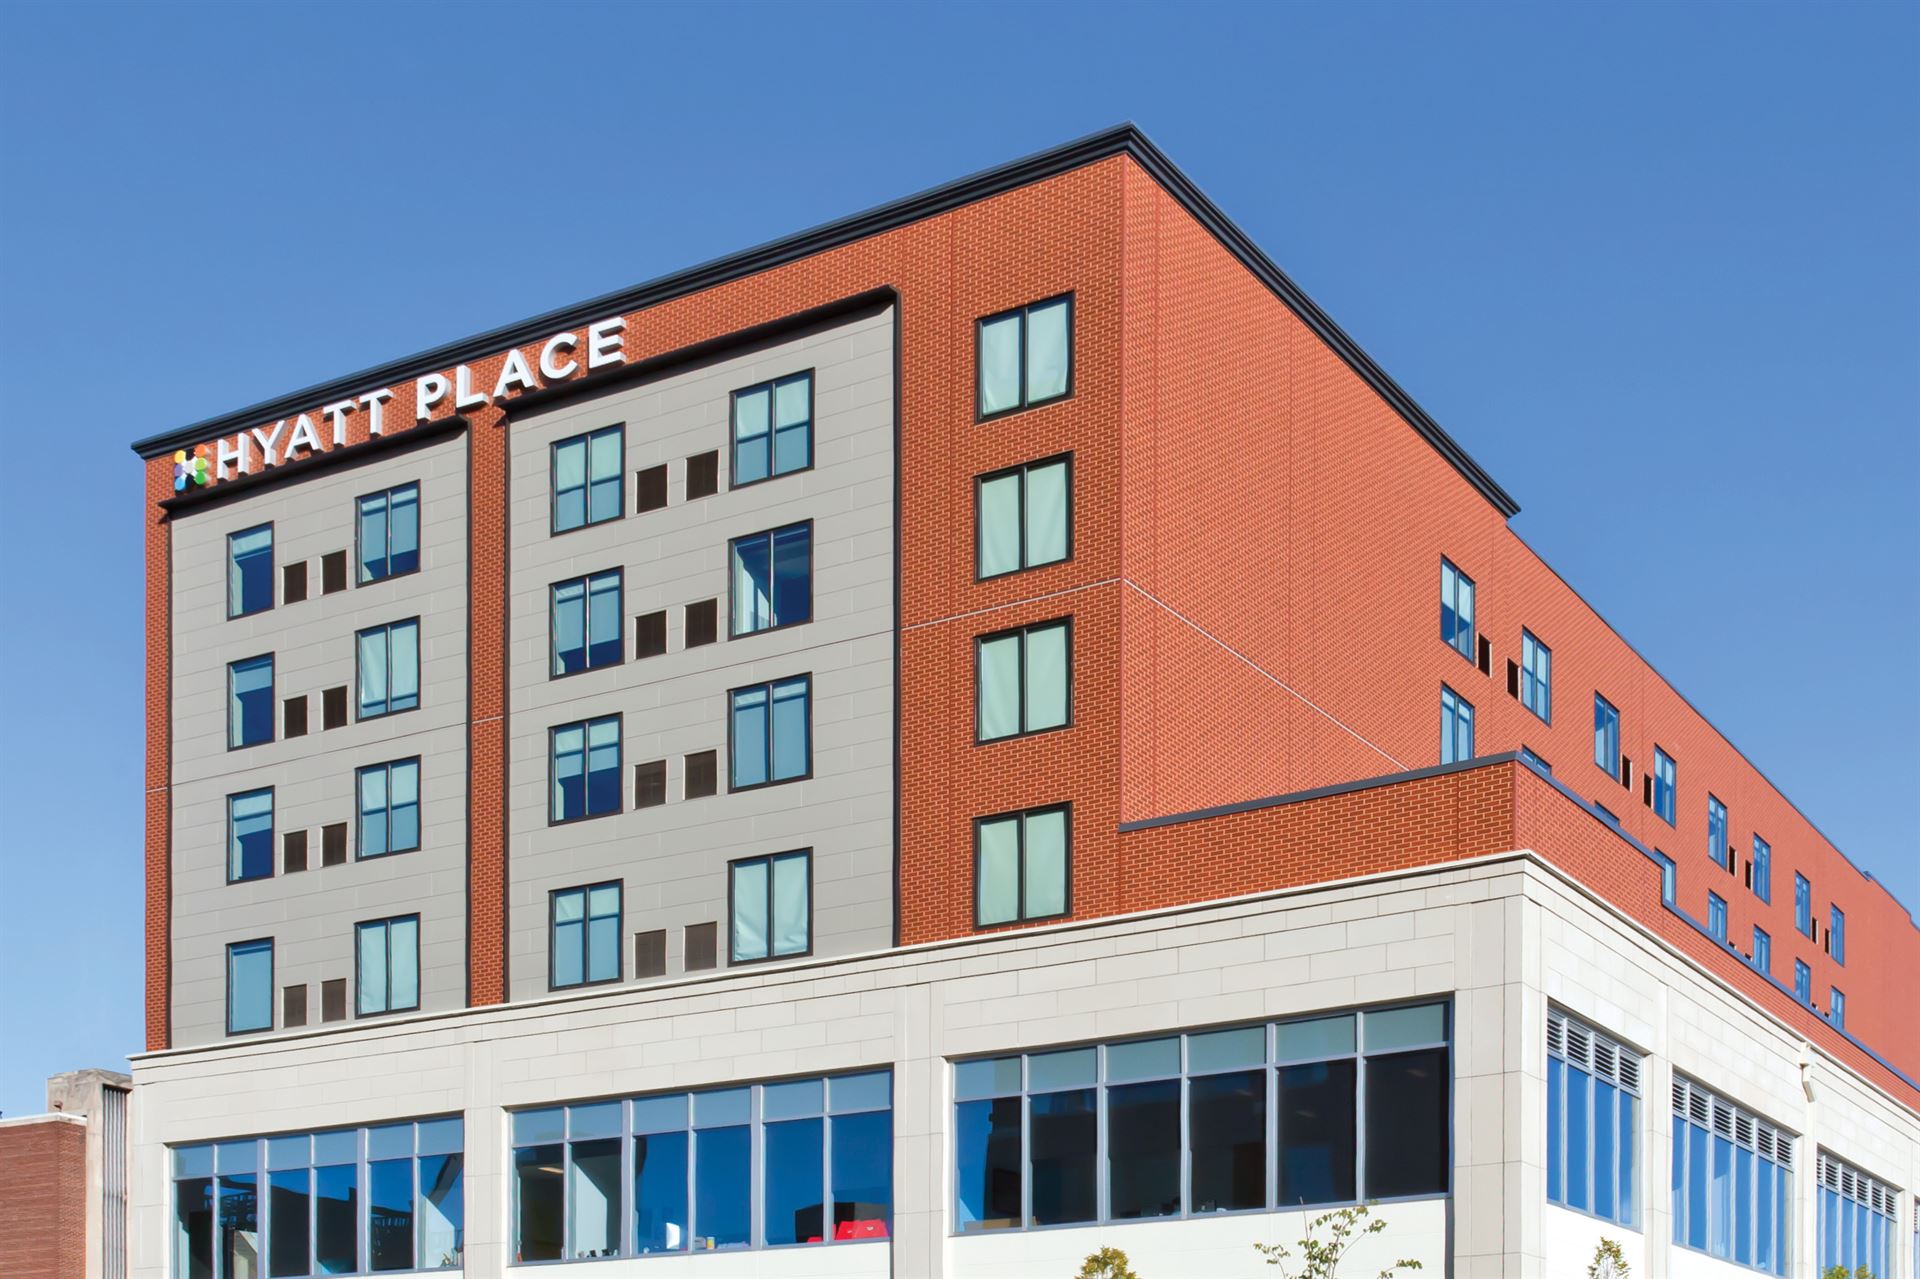 A Hyatt Place hotel utilizing a mixture of gray and red brick Nichiha fiber cement siding.